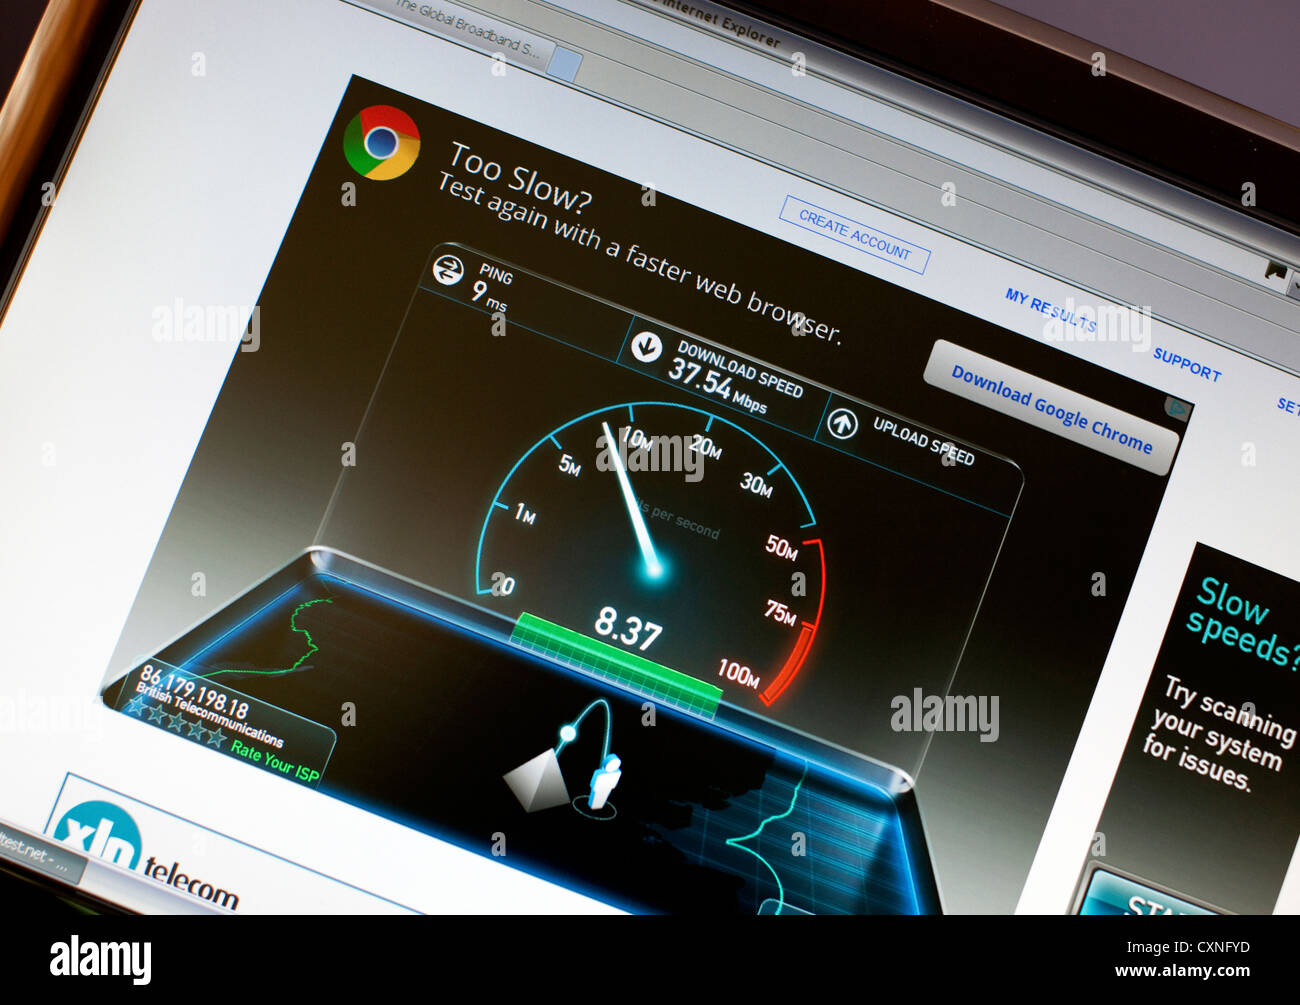 Upload speed of 8.37Mbps using BT Infinity Fibre Optic broadband service, London Stock Photo